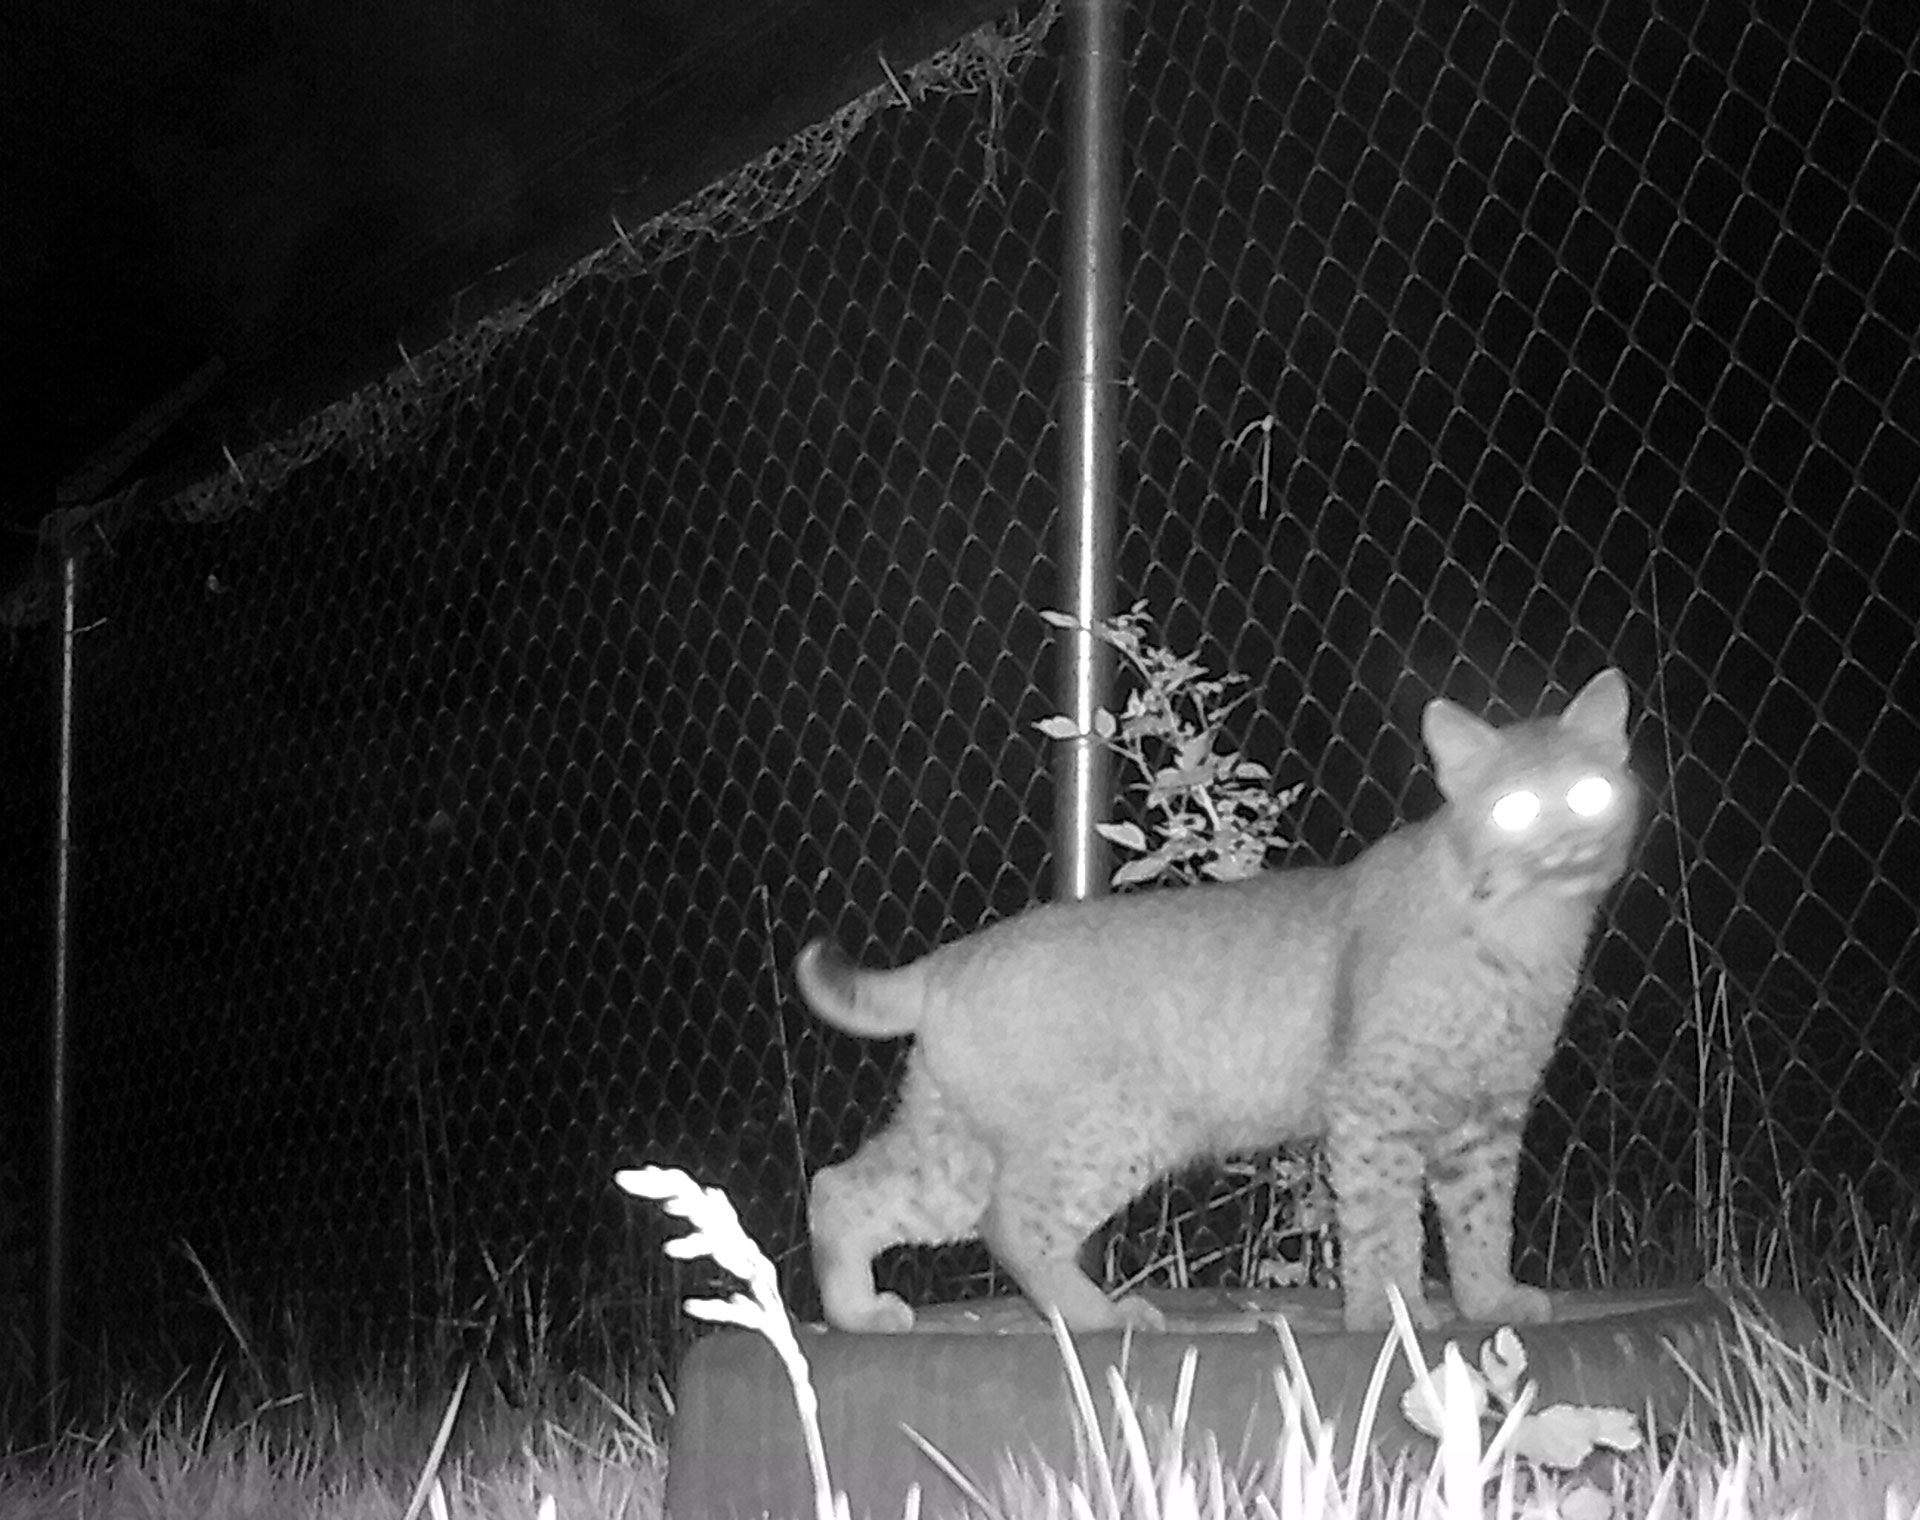 Bobcat outside the rabbit enclosure